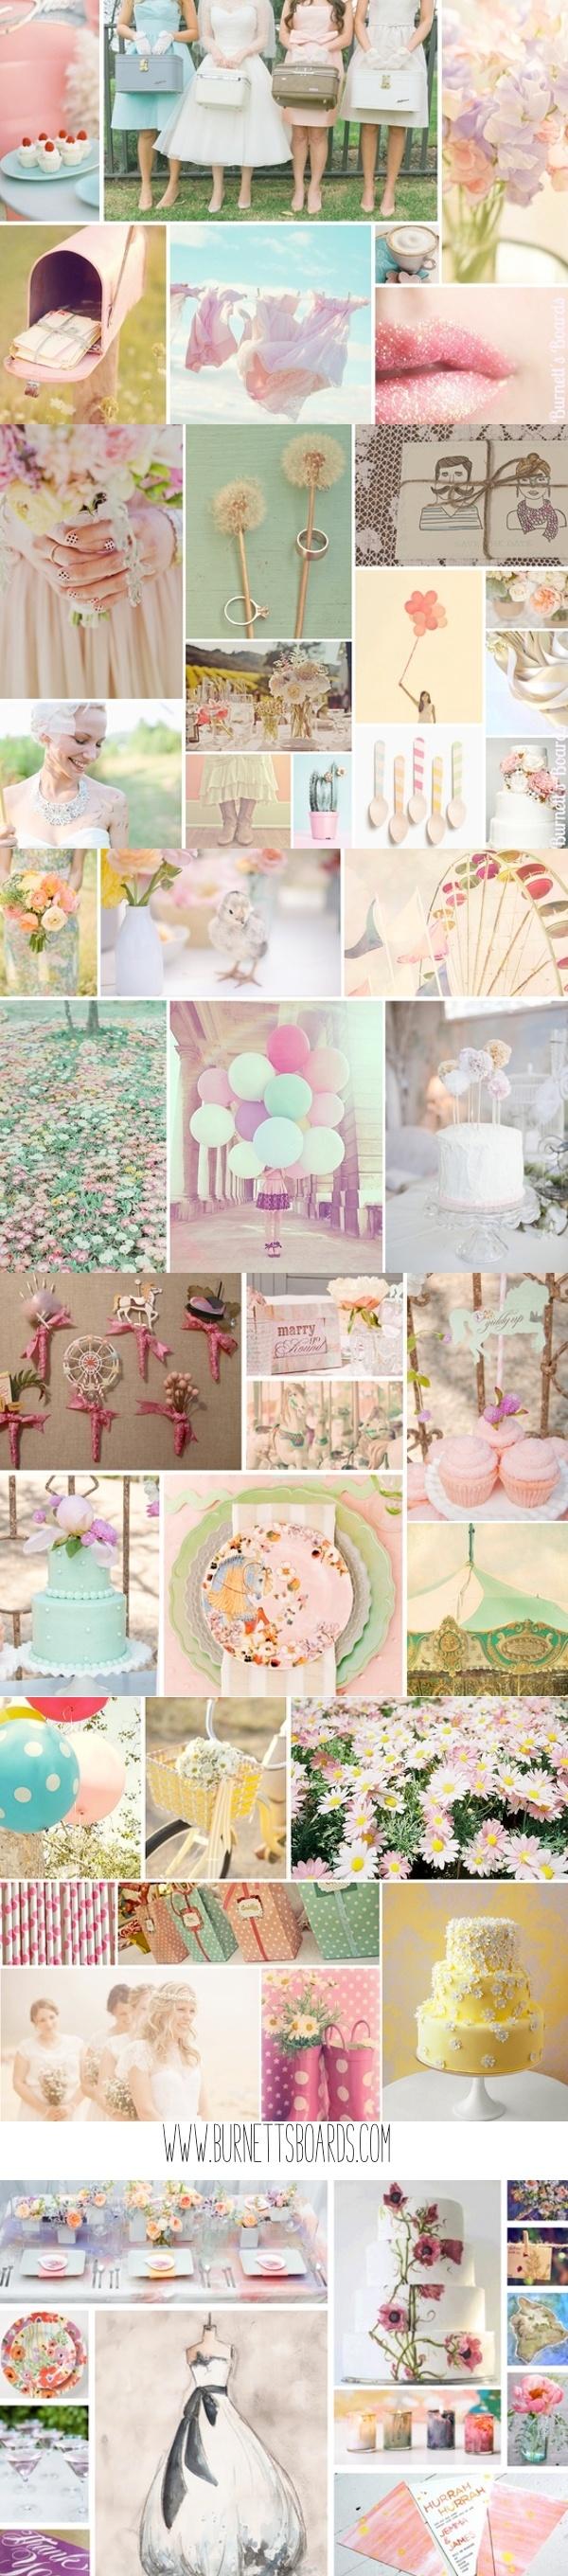 Wedding - Pastel Wedding Inspiration Boards